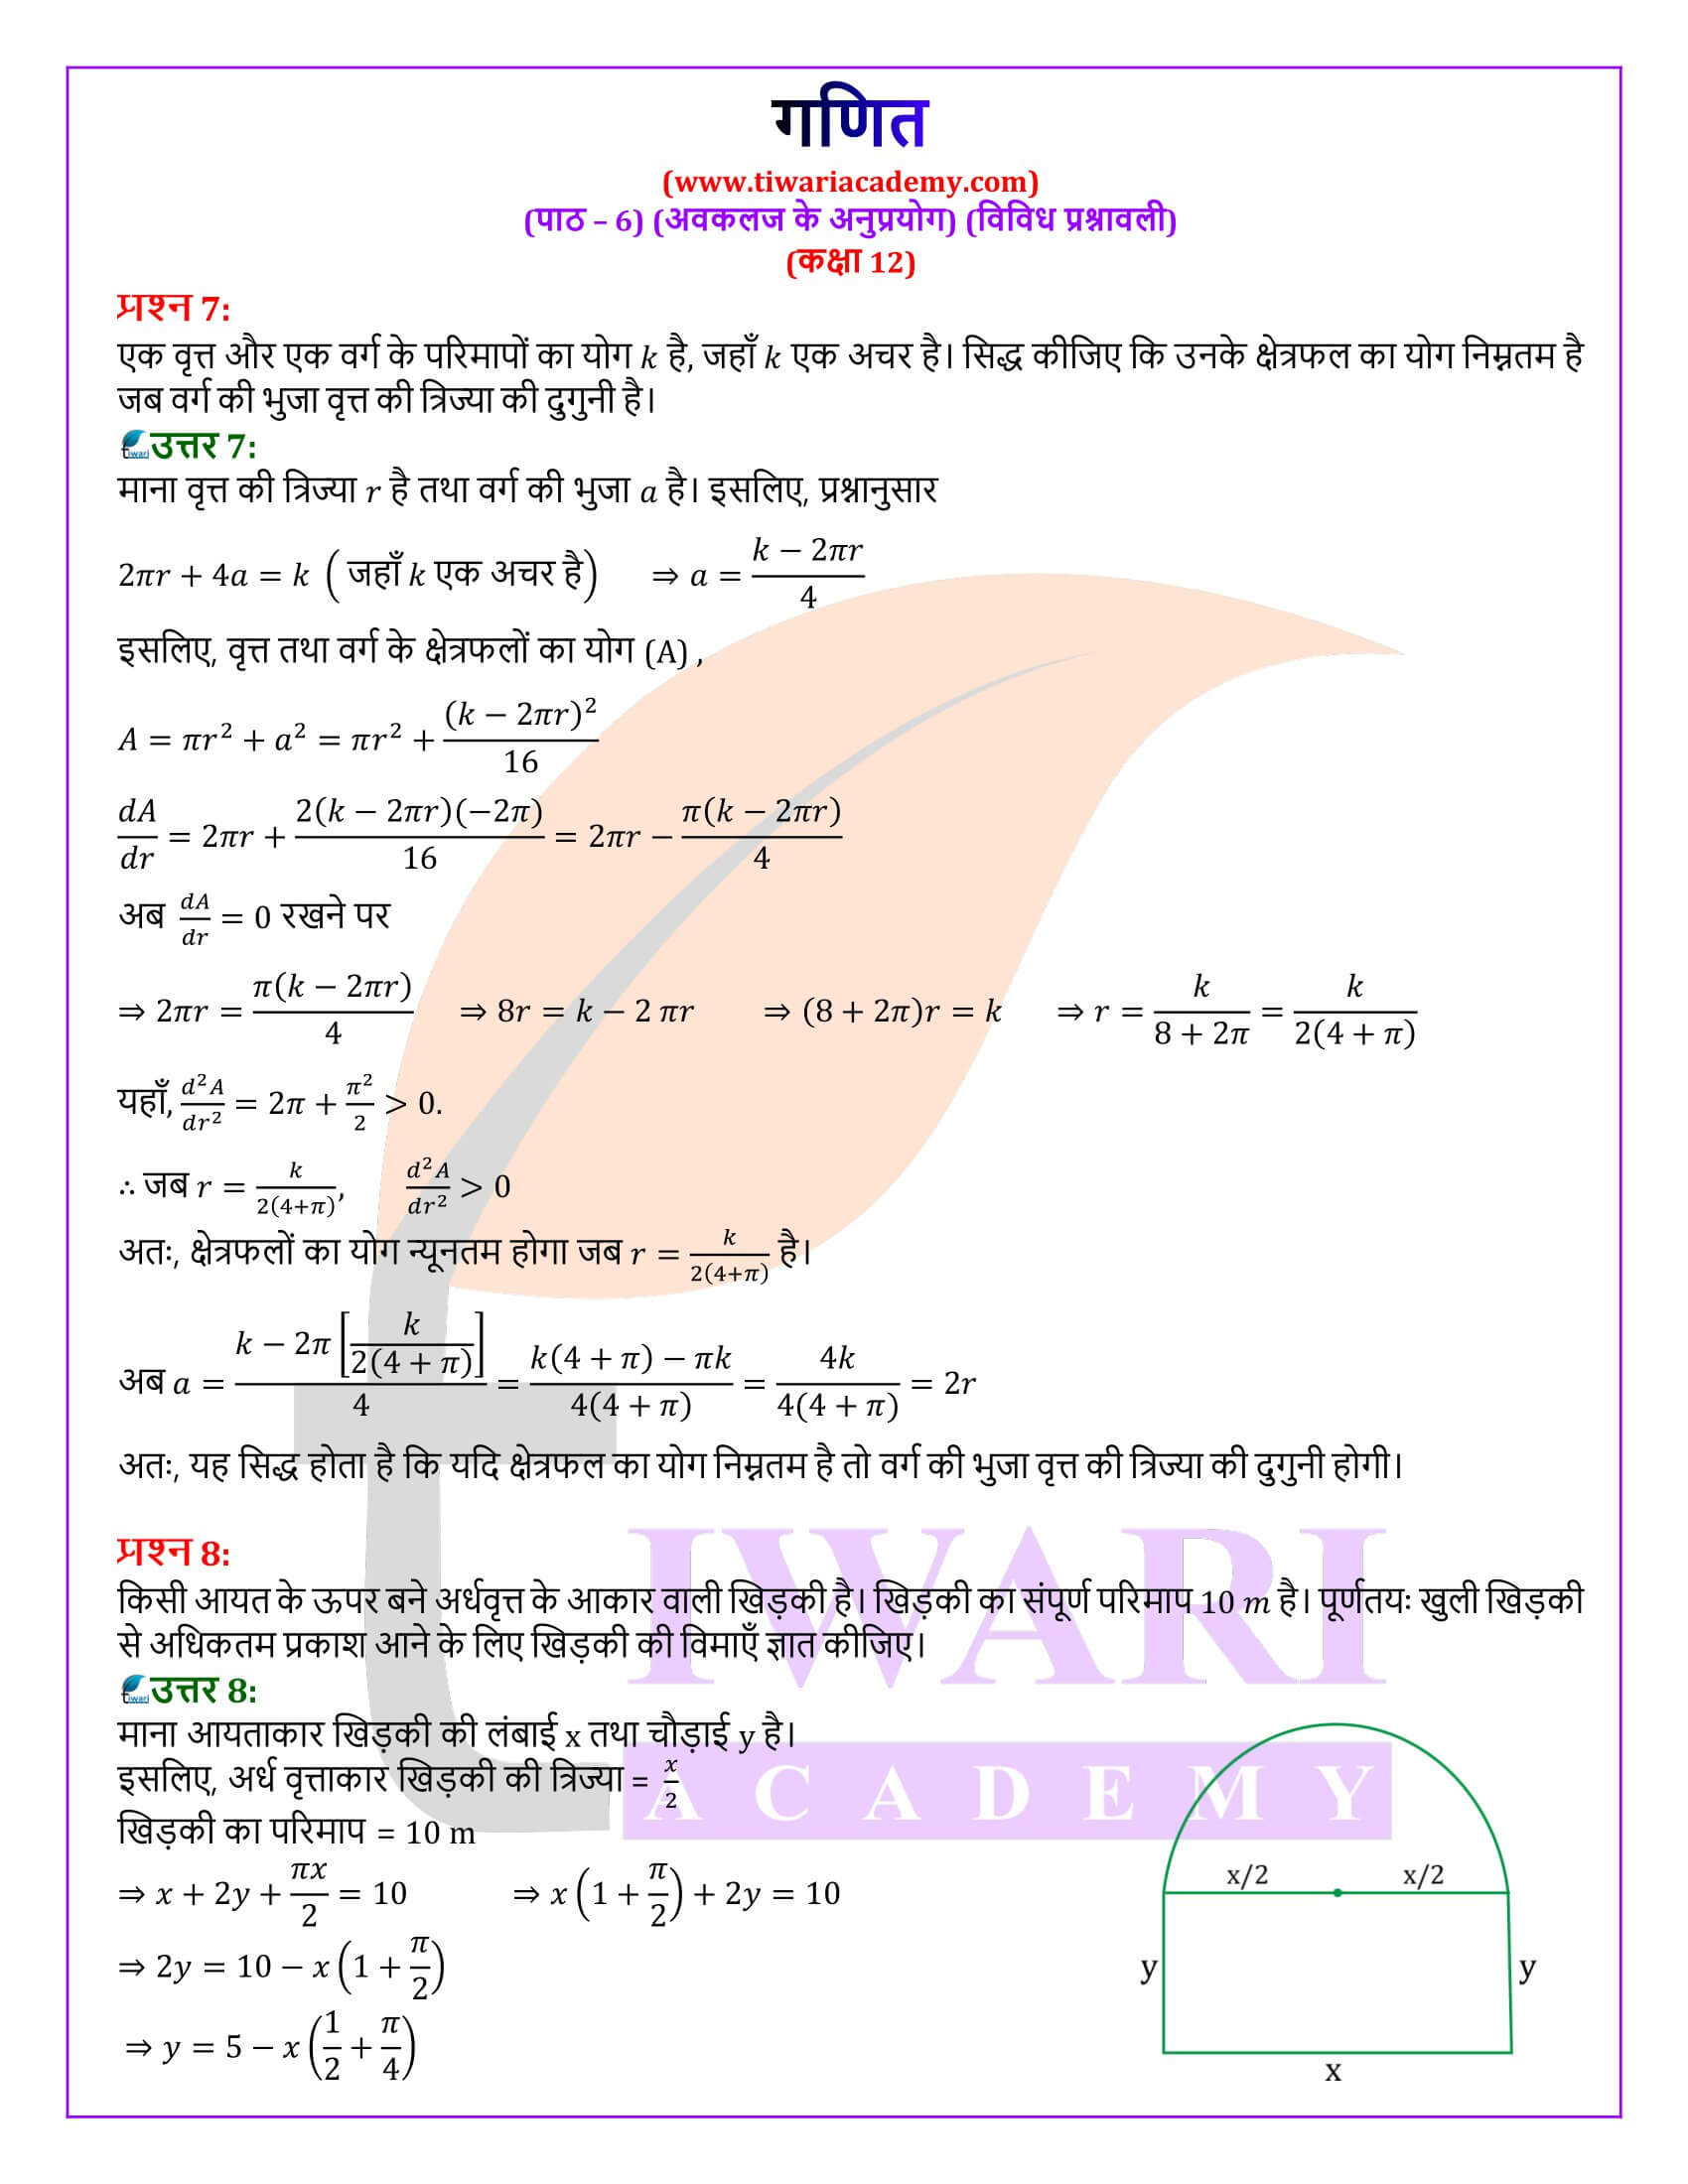 कक्षा 12 गणित अध्याय 6 विविध प्रश्नावली प्रश्न उत्तर